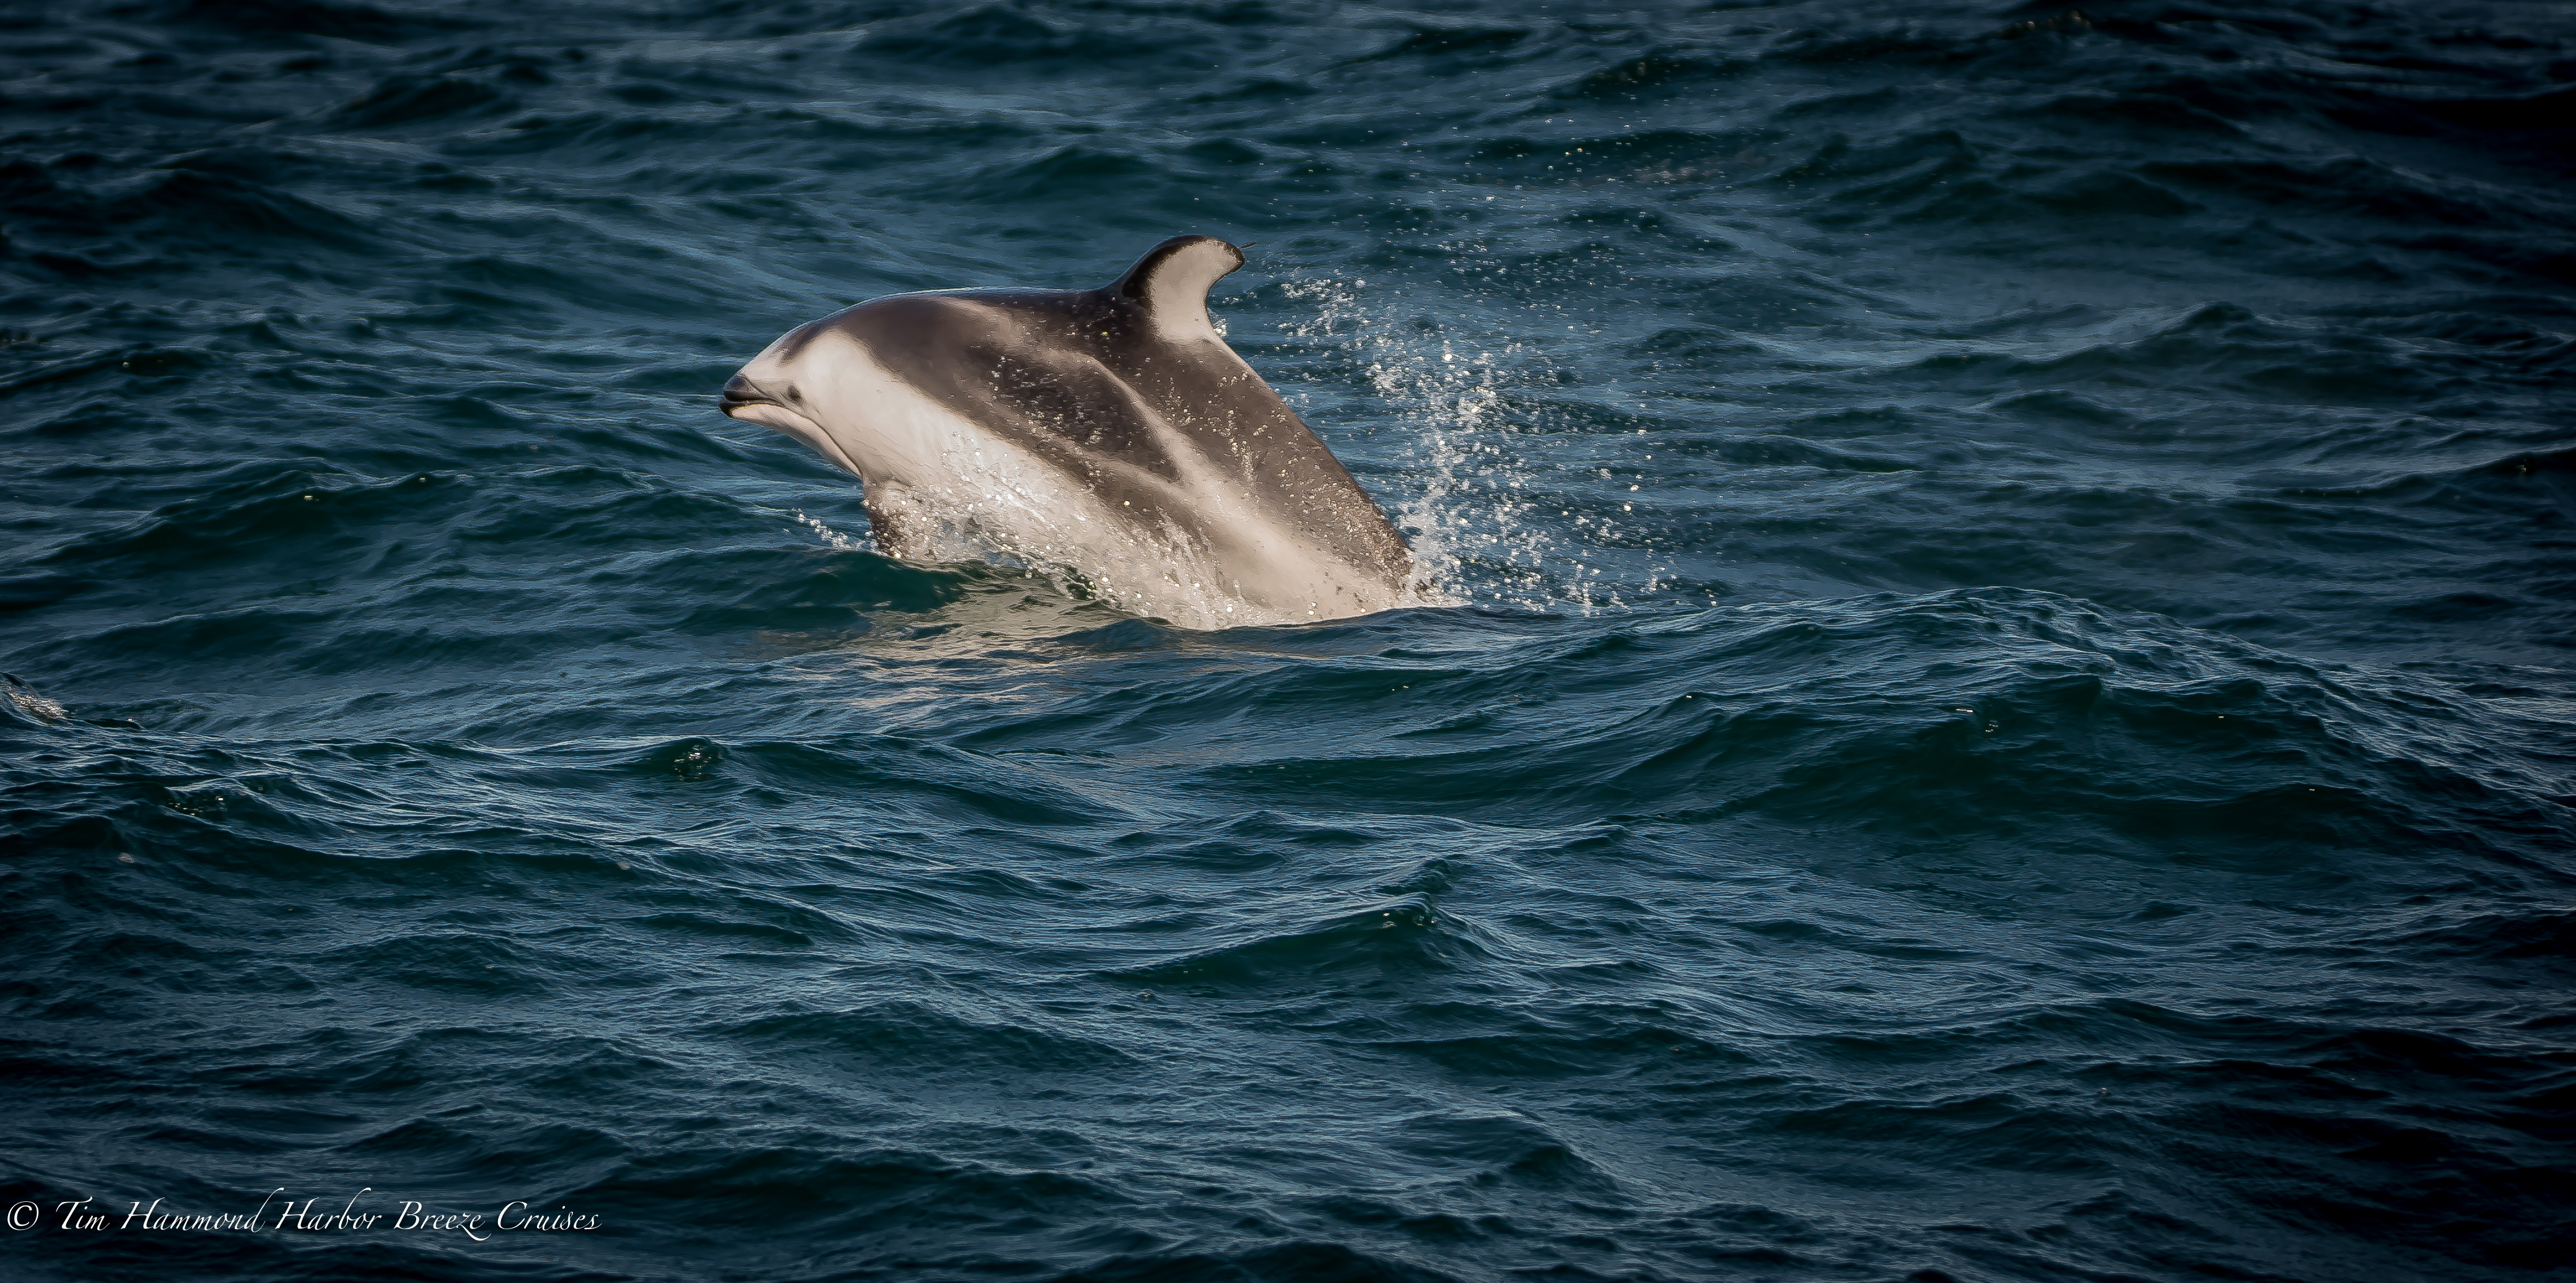 Golfinho-de-laterais-brancas-do-pacífico / Pacific White Sided Dolphin <i>Lagenorhynchus obliquidens<i>